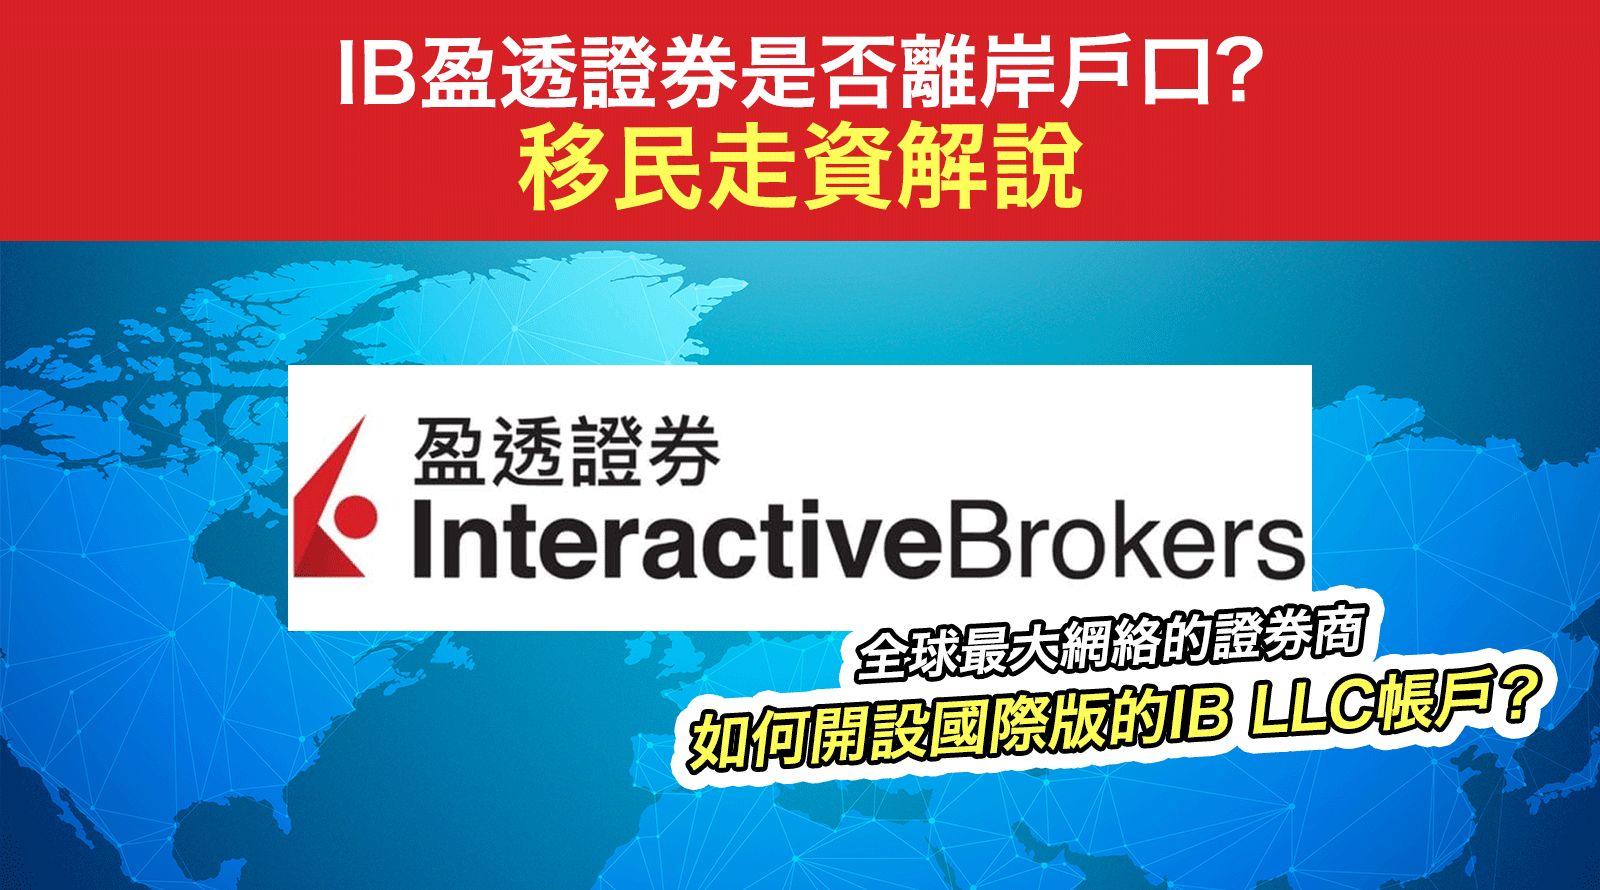 IB盈透證券(InteractiveBrokers)是否離岸戶口？如何開設國際版的IB-LLC帳戶丨移民走資解說